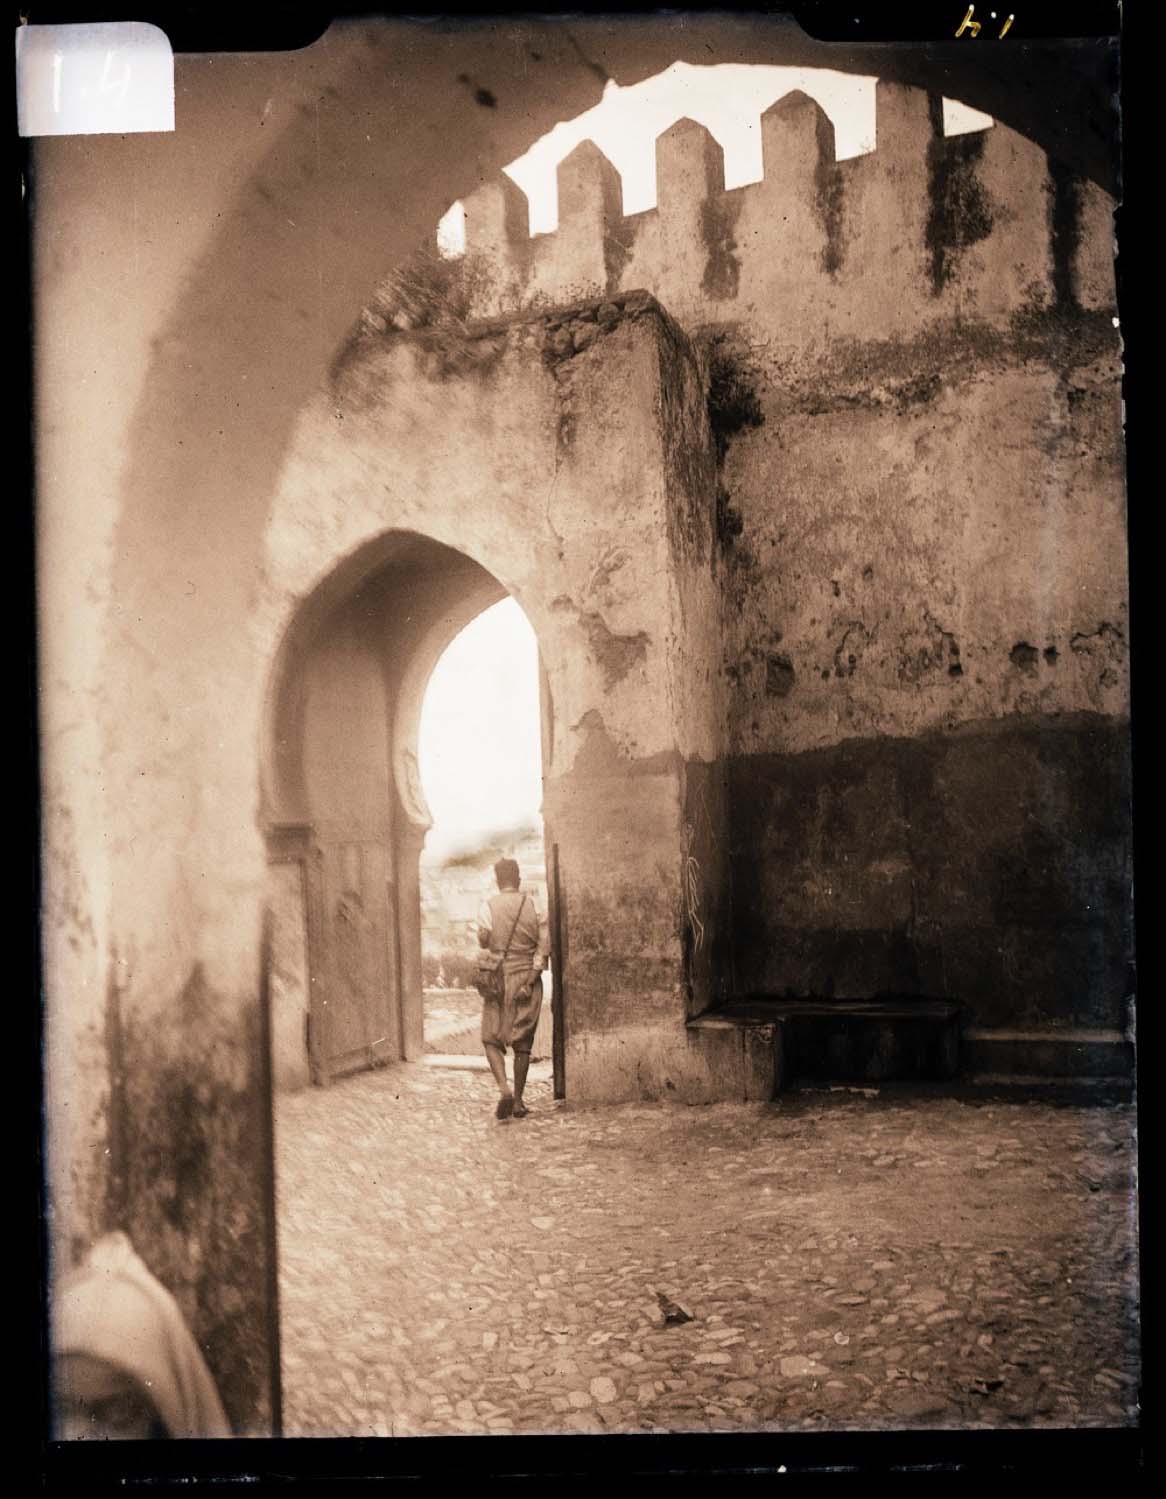 Bab al-Assa - Soldier at the medina gate of Bab al-Assa, viewed from the Qasba gate